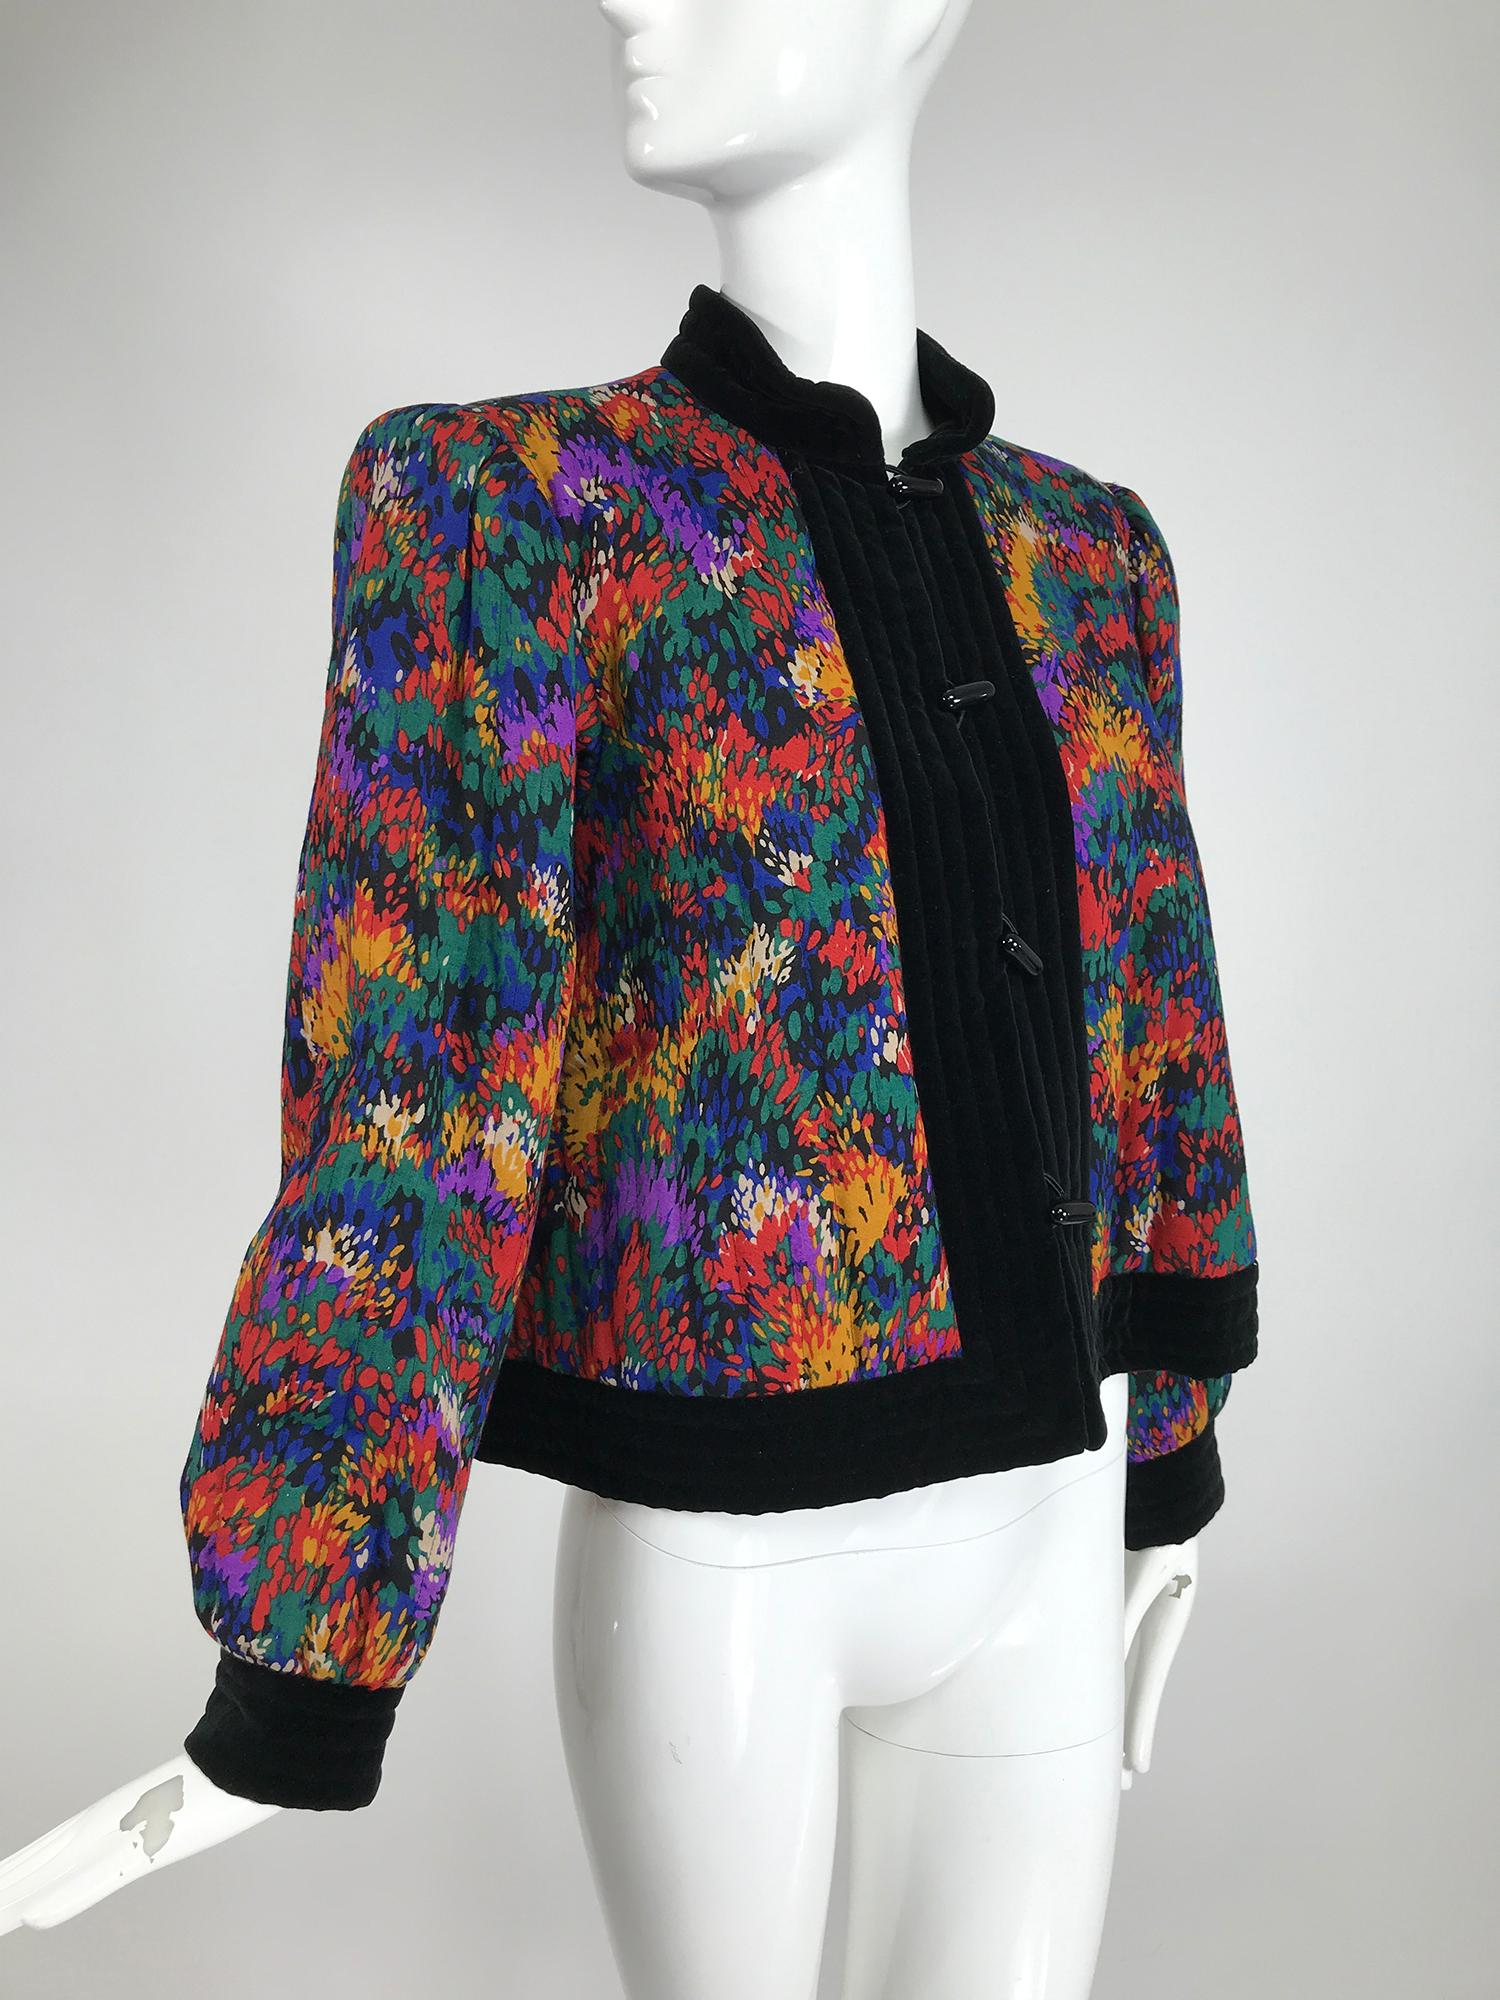 Yves Saint Laurent Quilted Modern Print Challis and Velvet Jacket 1980s For Sale 3